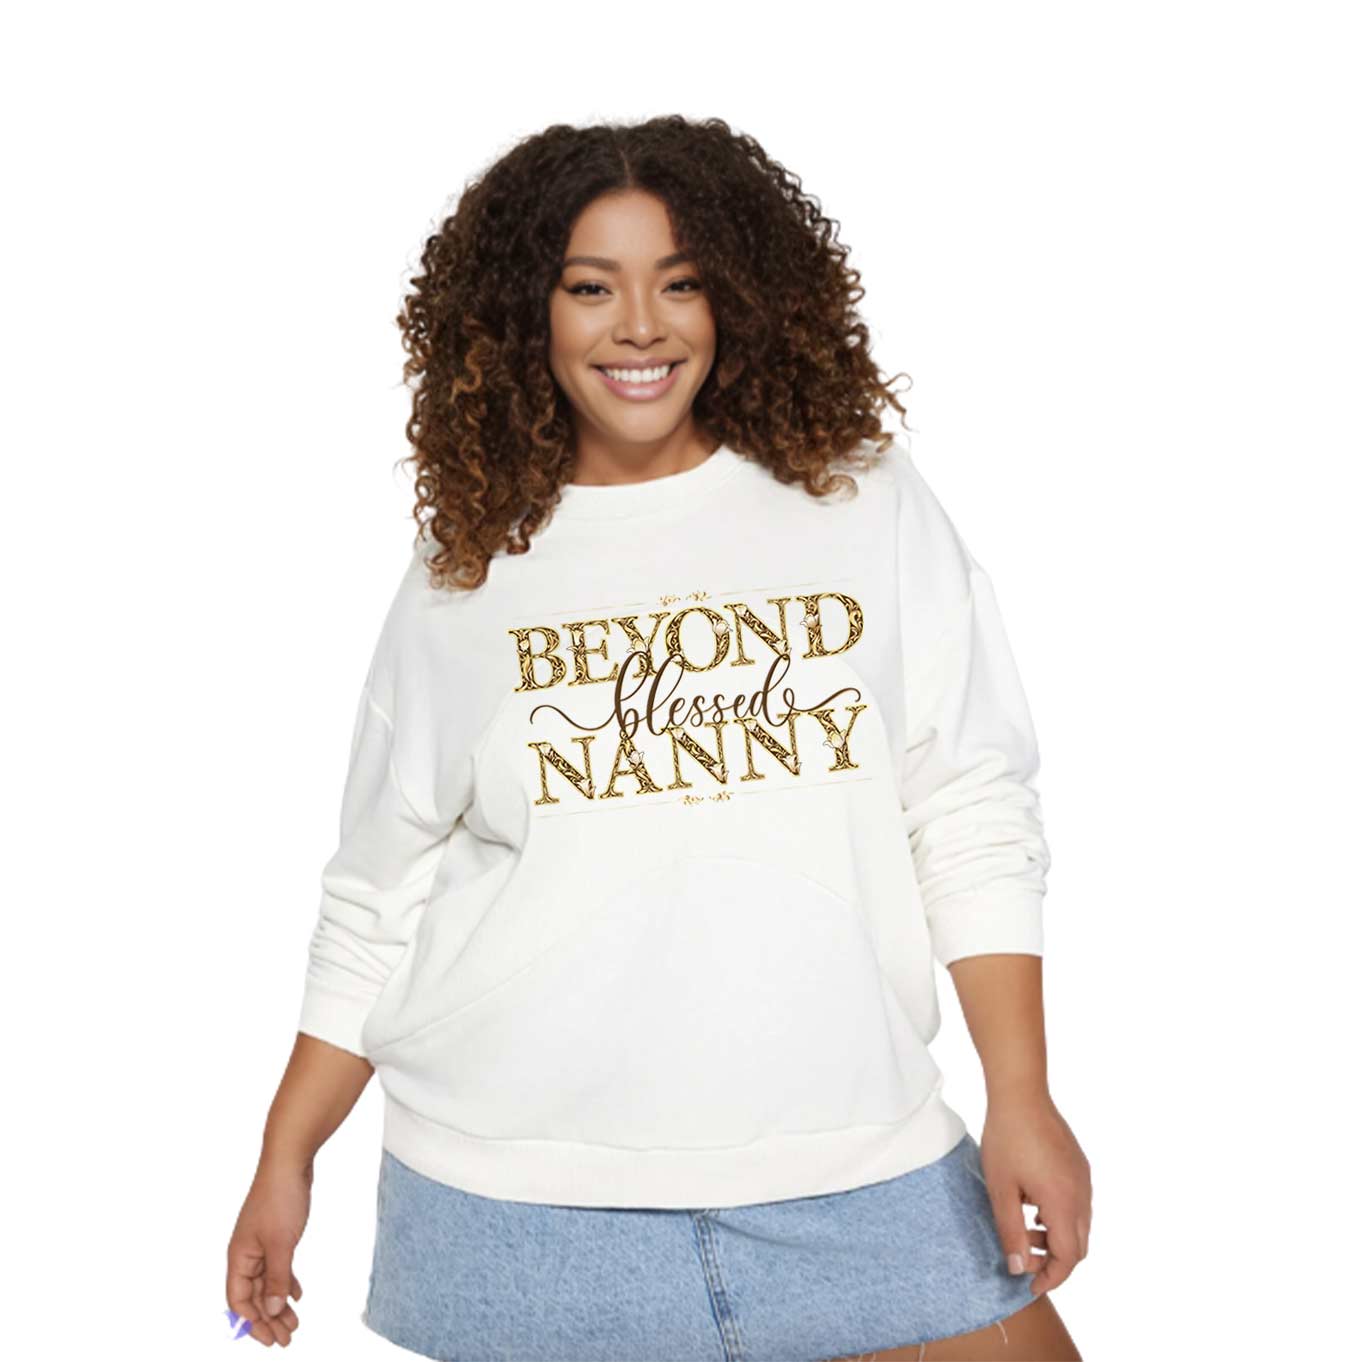 Beyond Blessed Nanny - Crewneck Sweatshirt